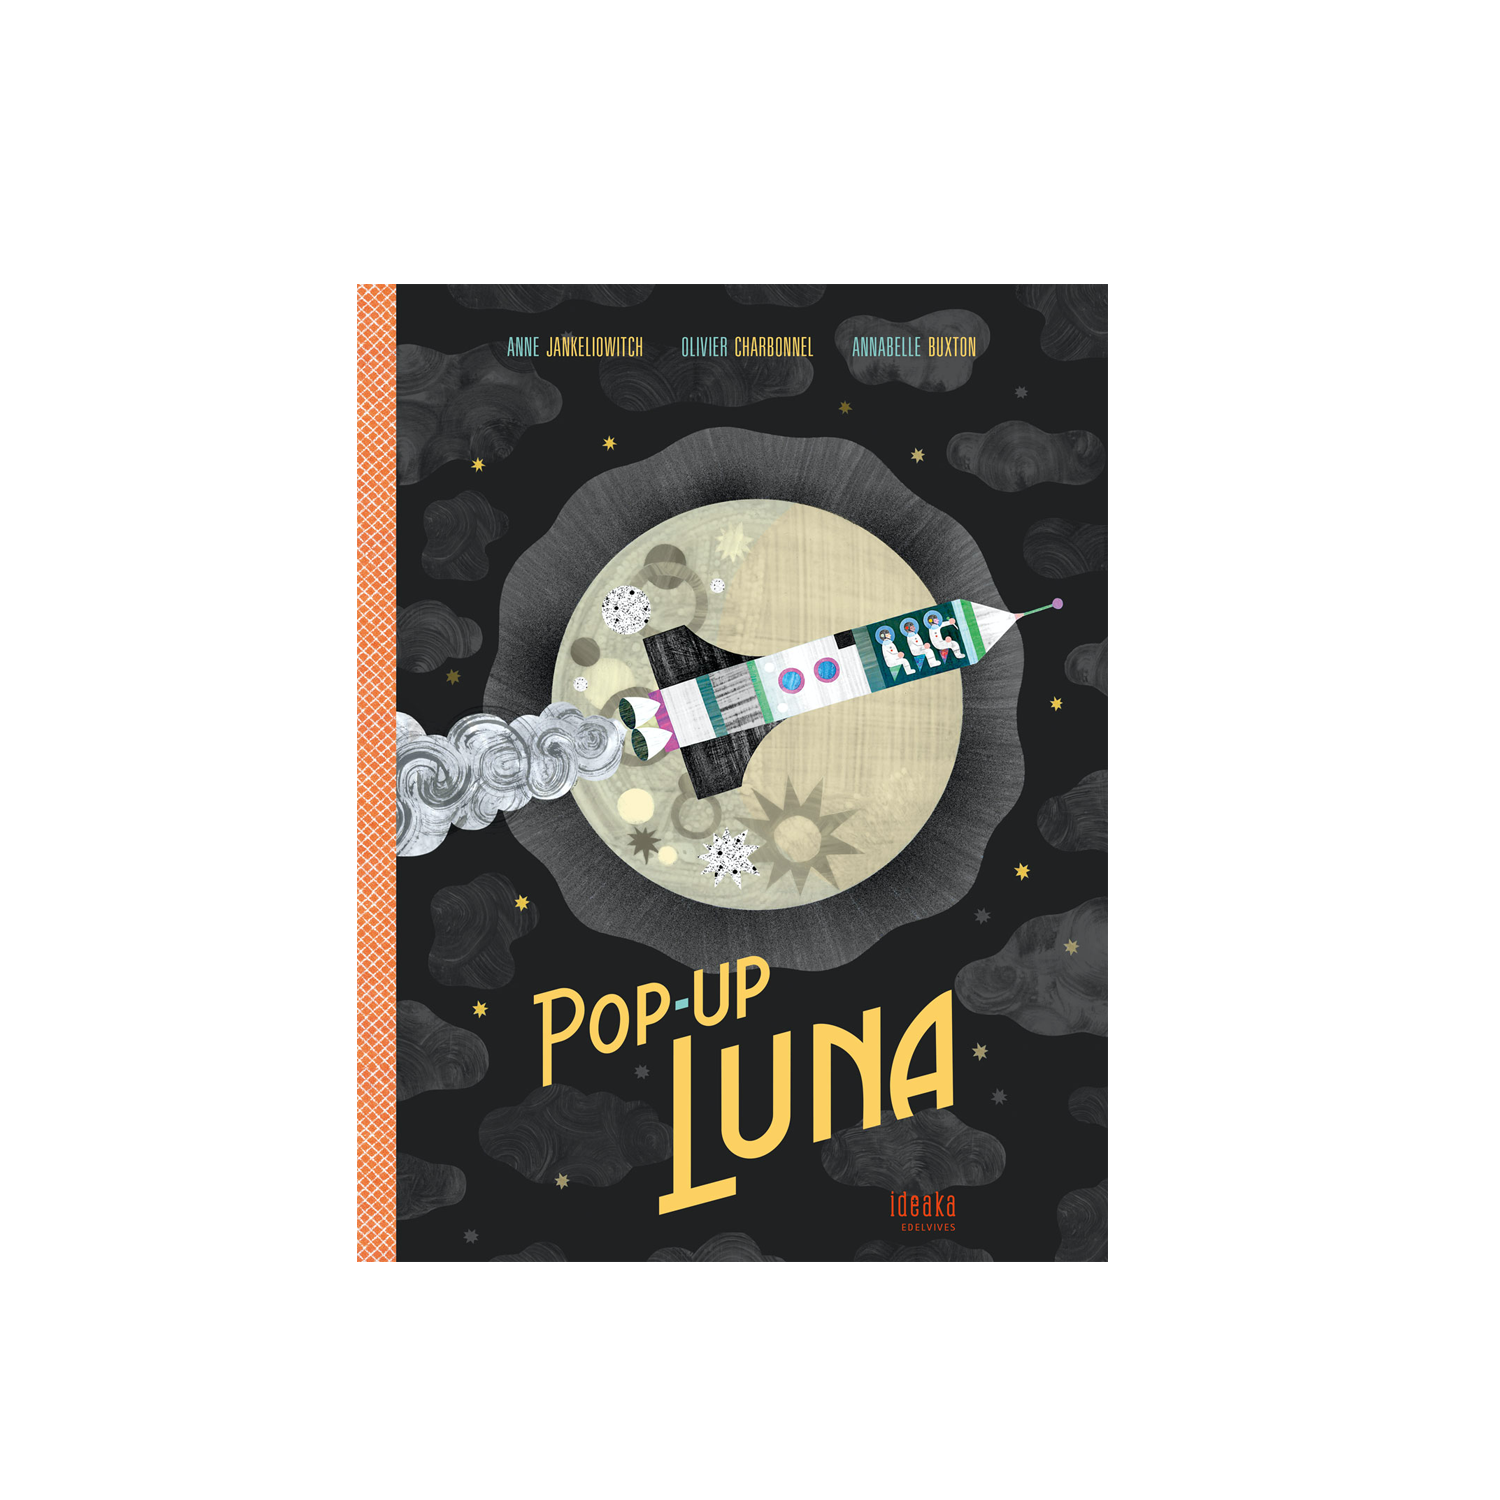 Pop-up Luna